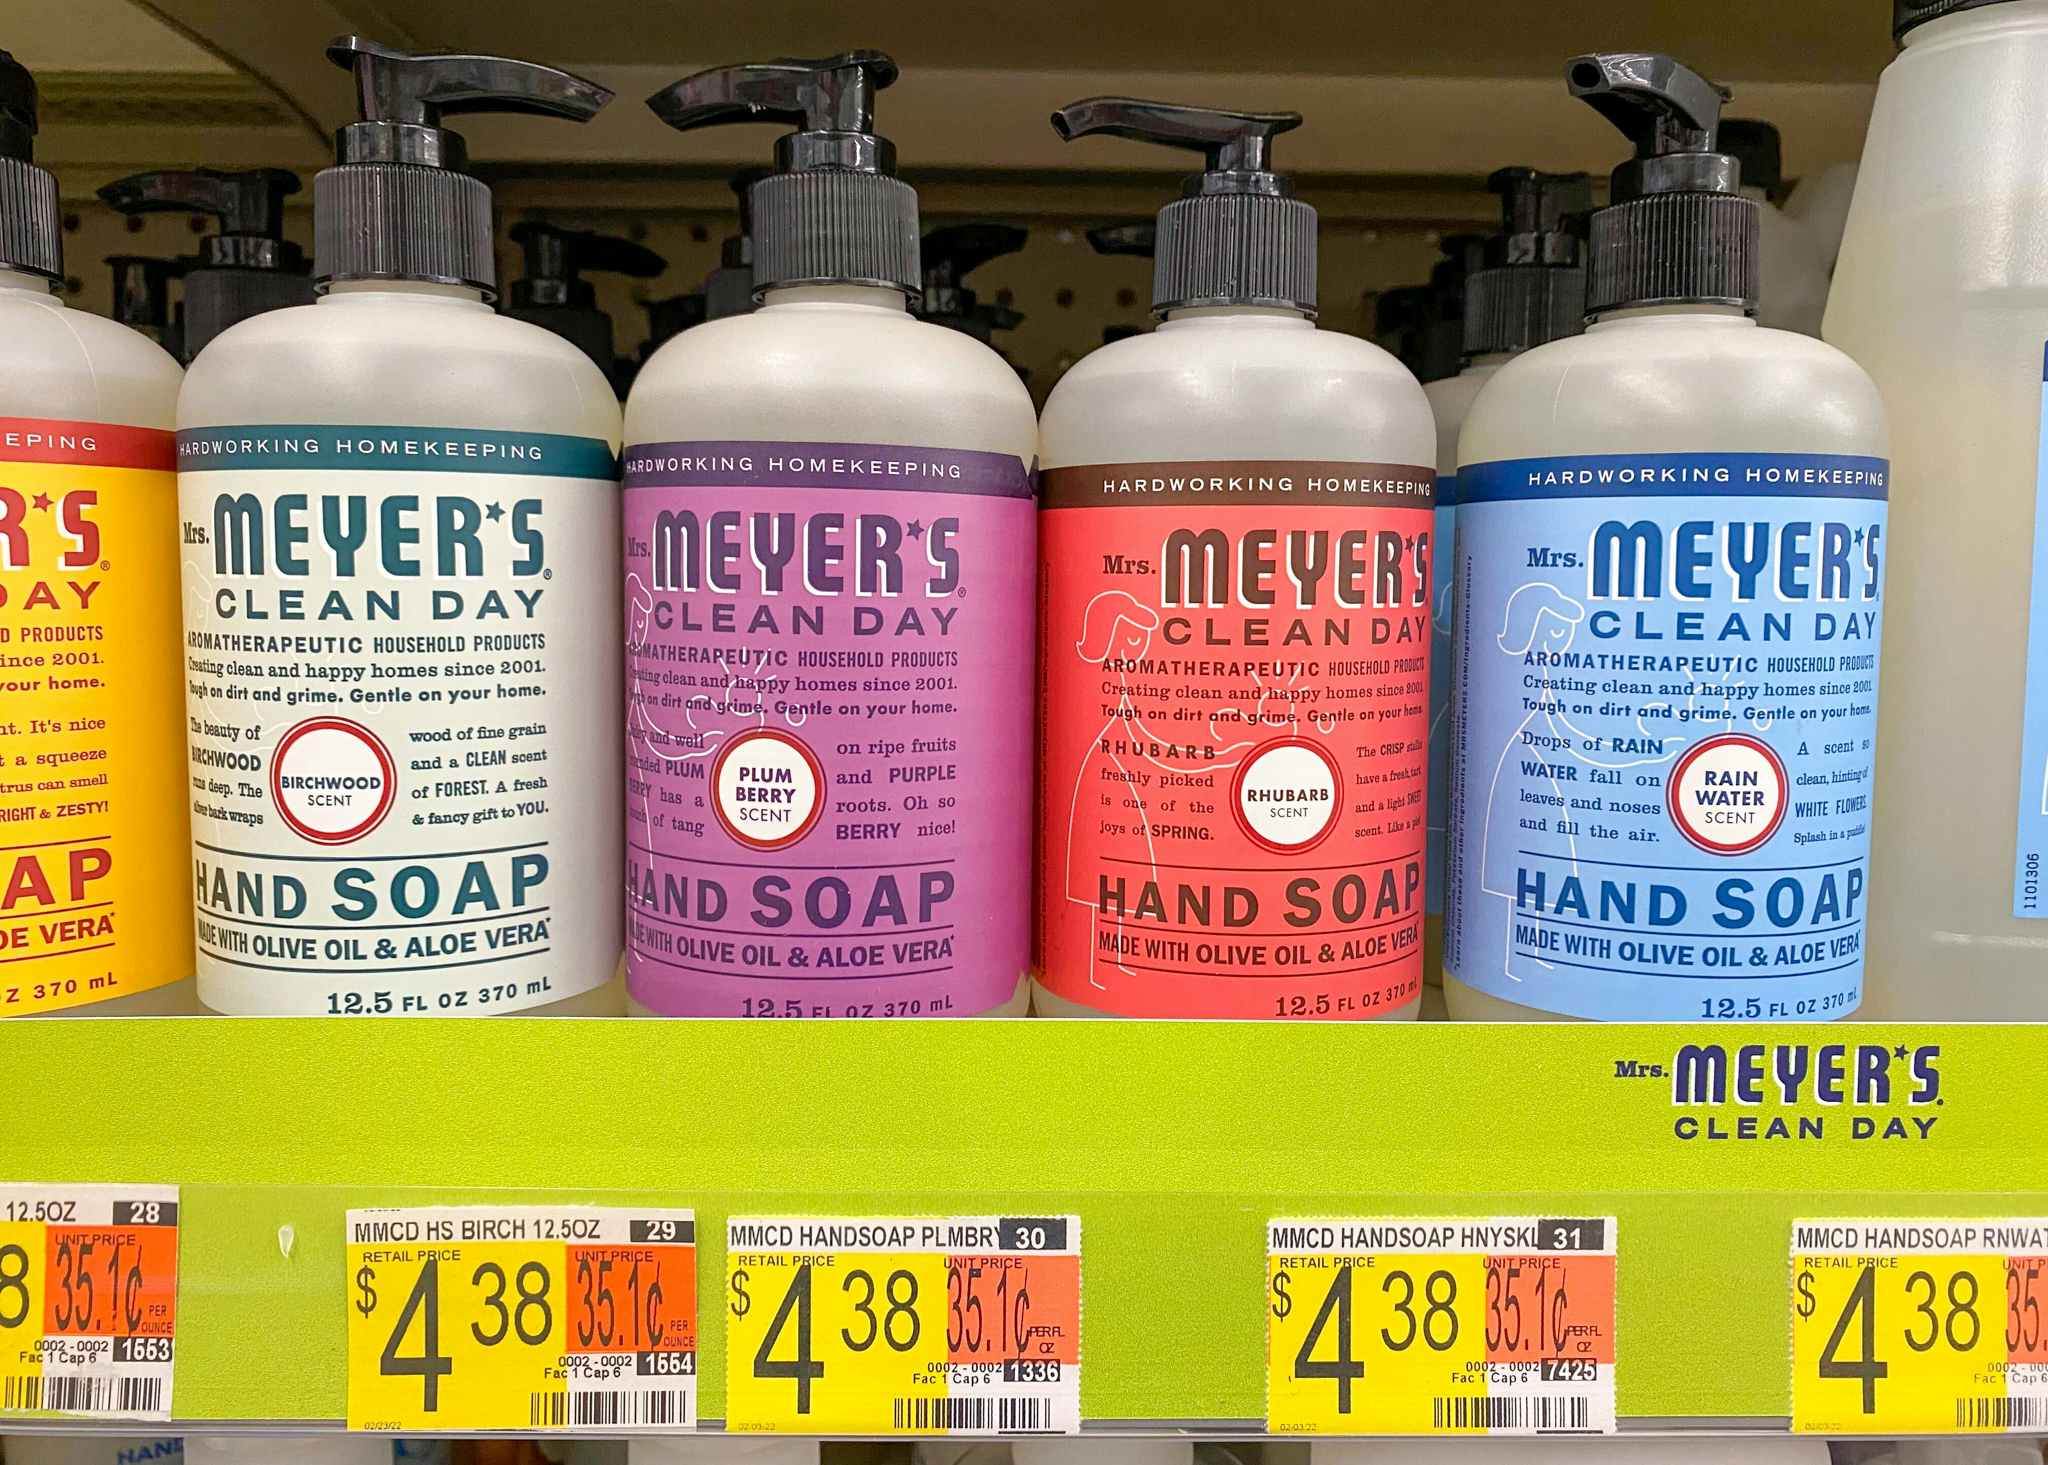 Mrs. Meyer's Hand Soap at Walmart